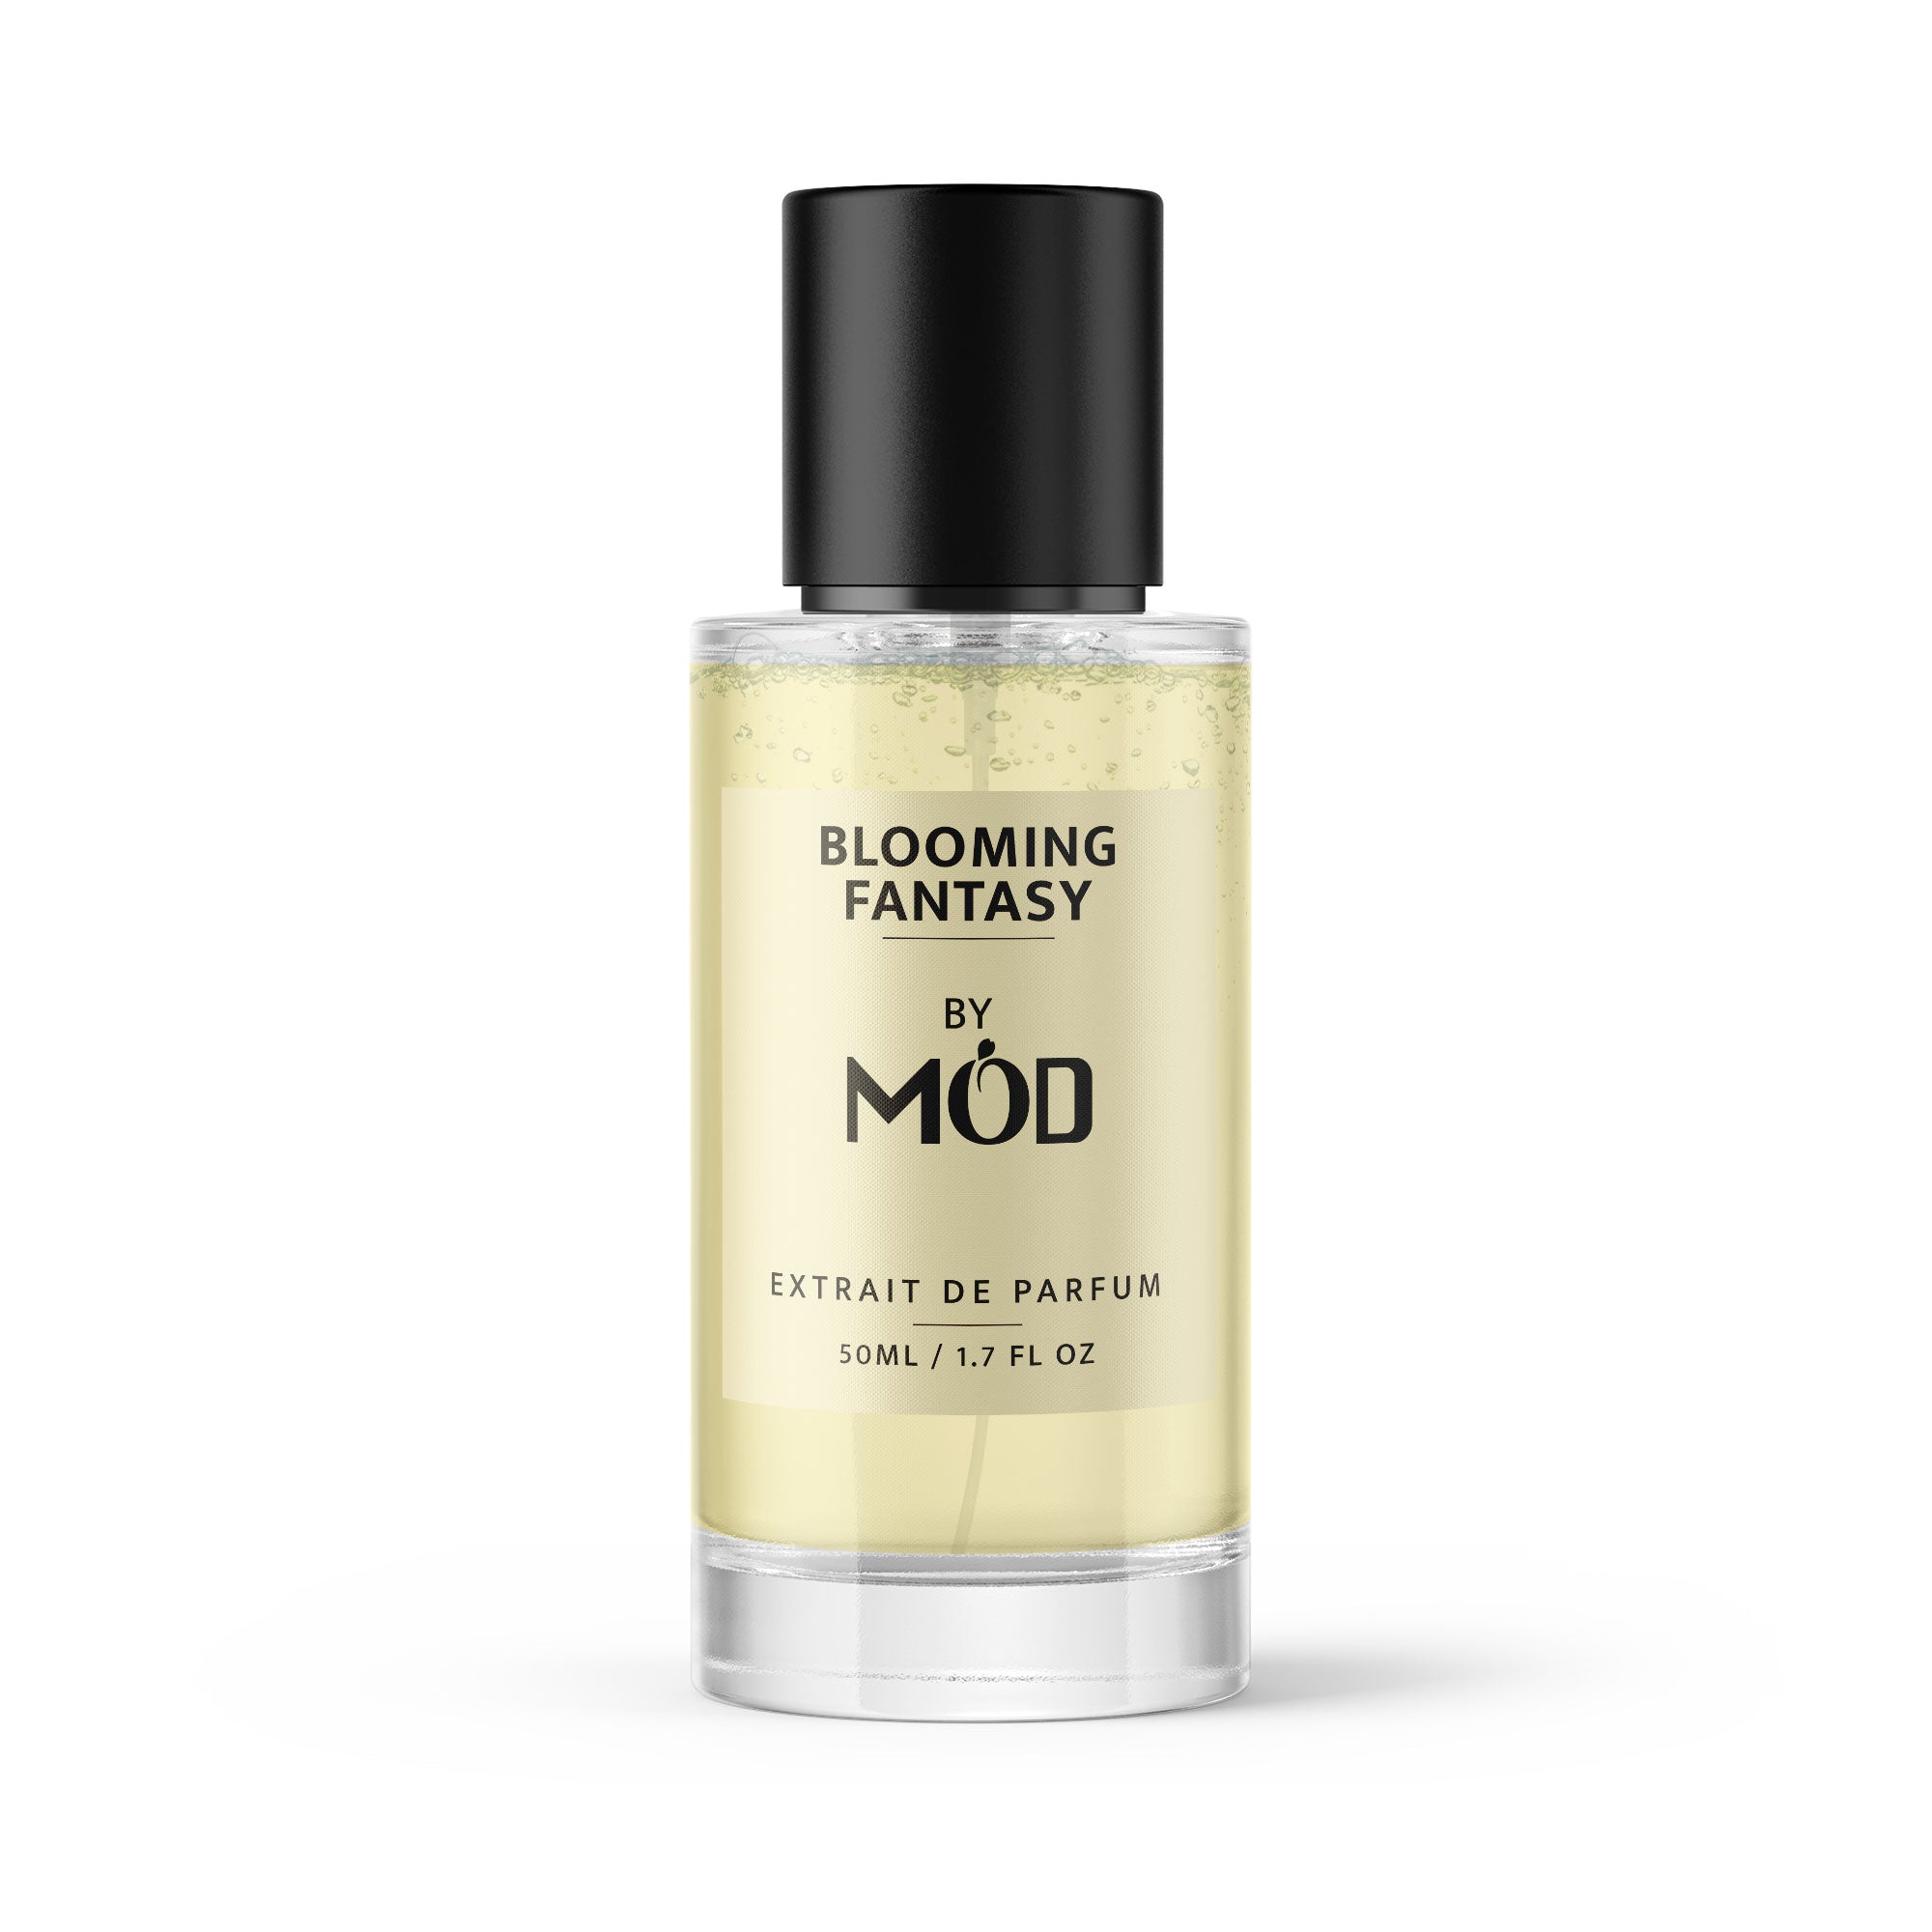 Blooming Fantasy - Mod Fragrances